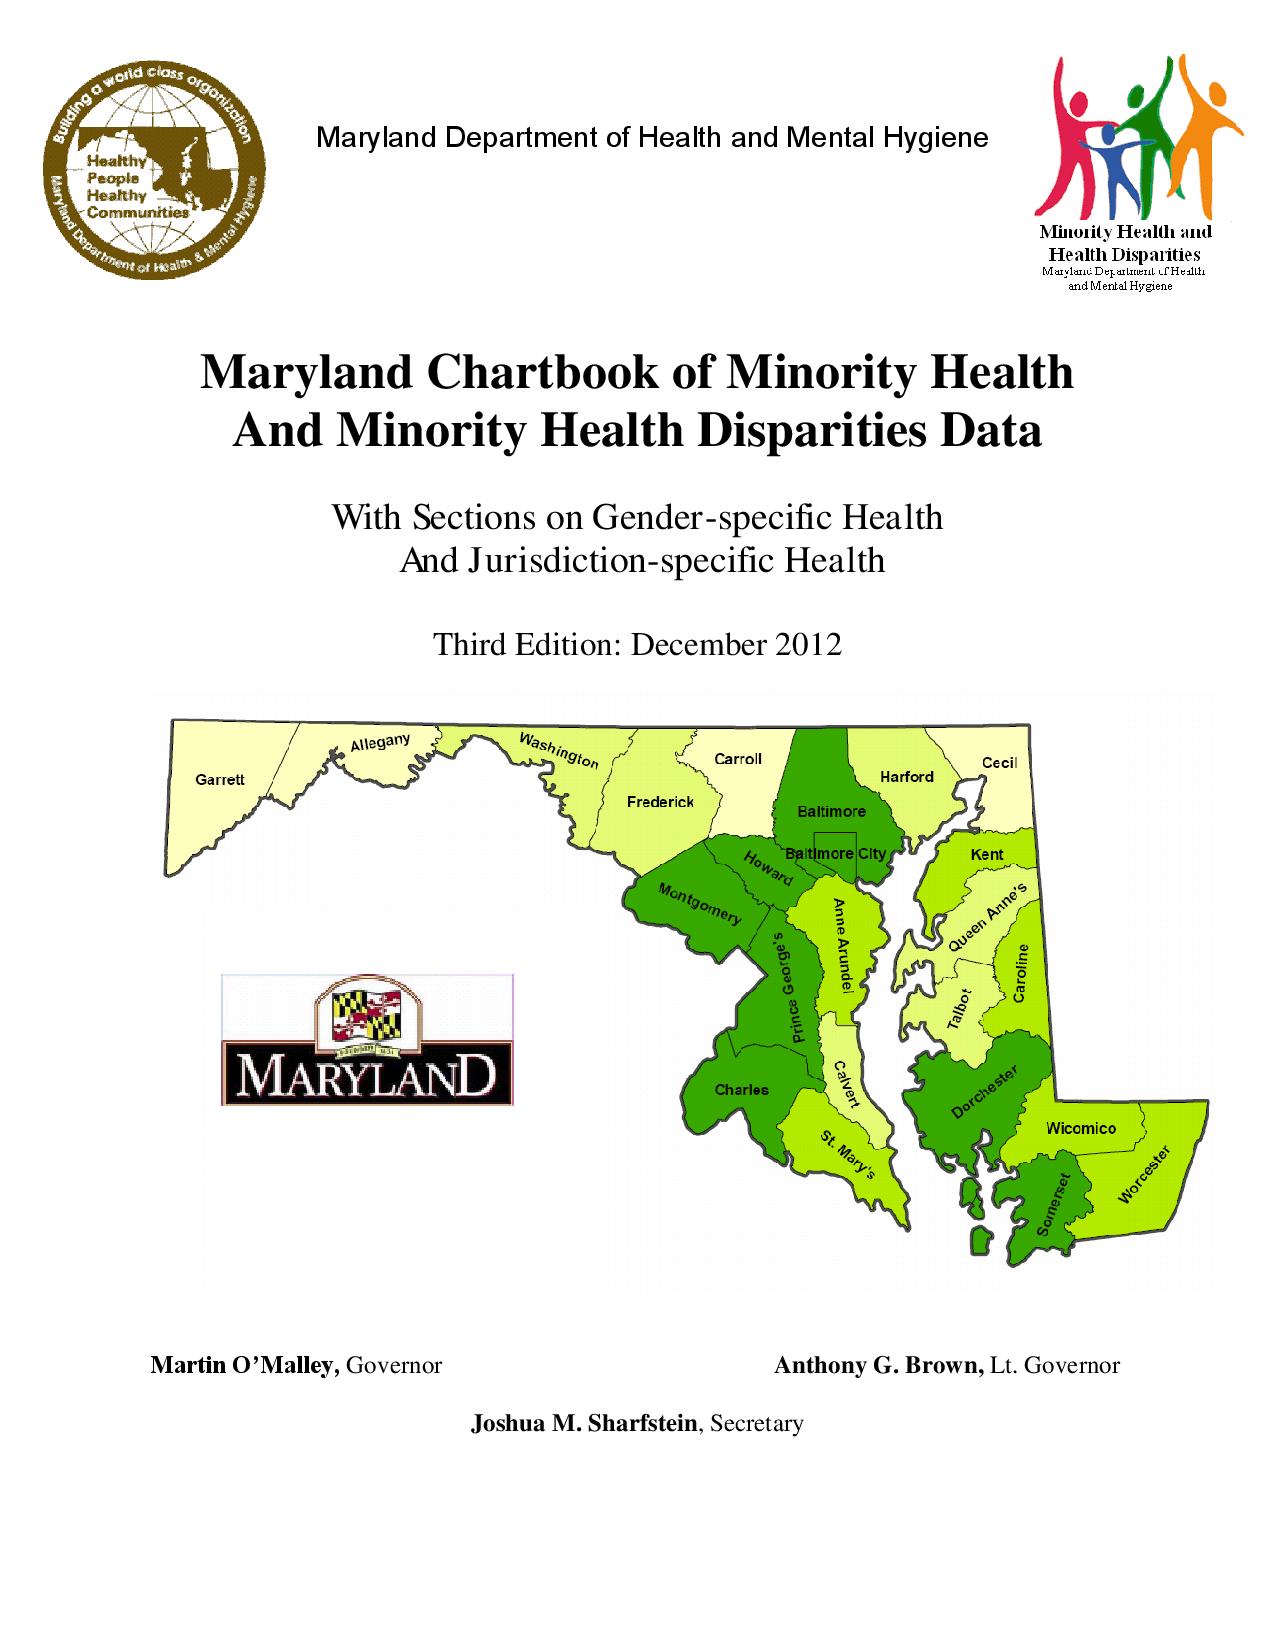 Maryland Chartbook of Minority Health and Minority Health Disparities Data, Third Edition (December 2012)-page-001.jpg